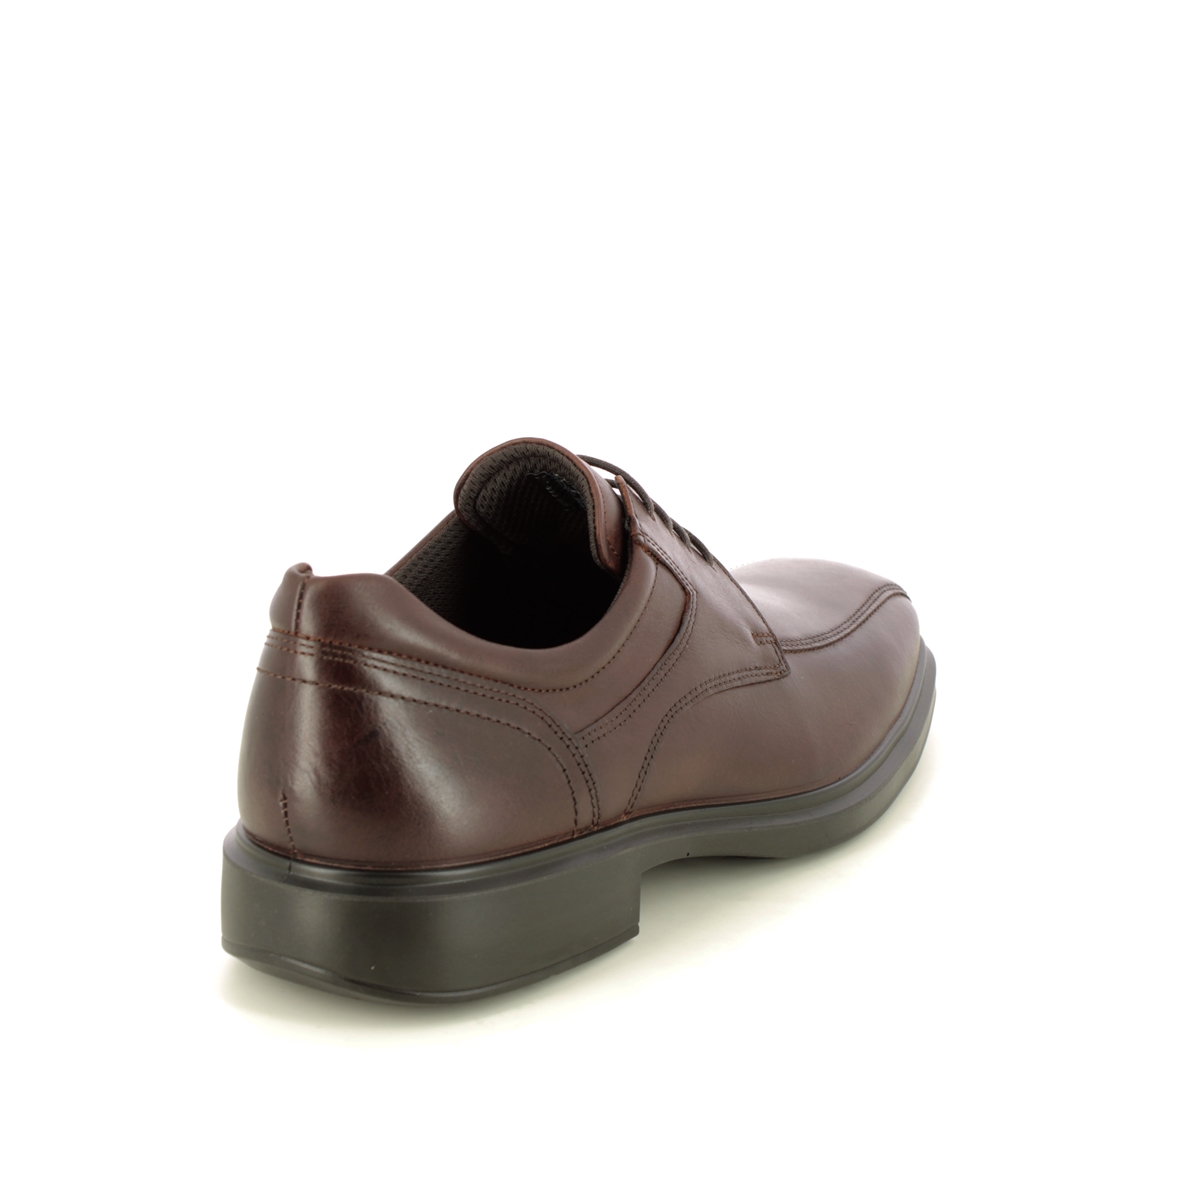 ECCO Helsinki 2 Tram Brown leather Mens formal shoes 500174-02014